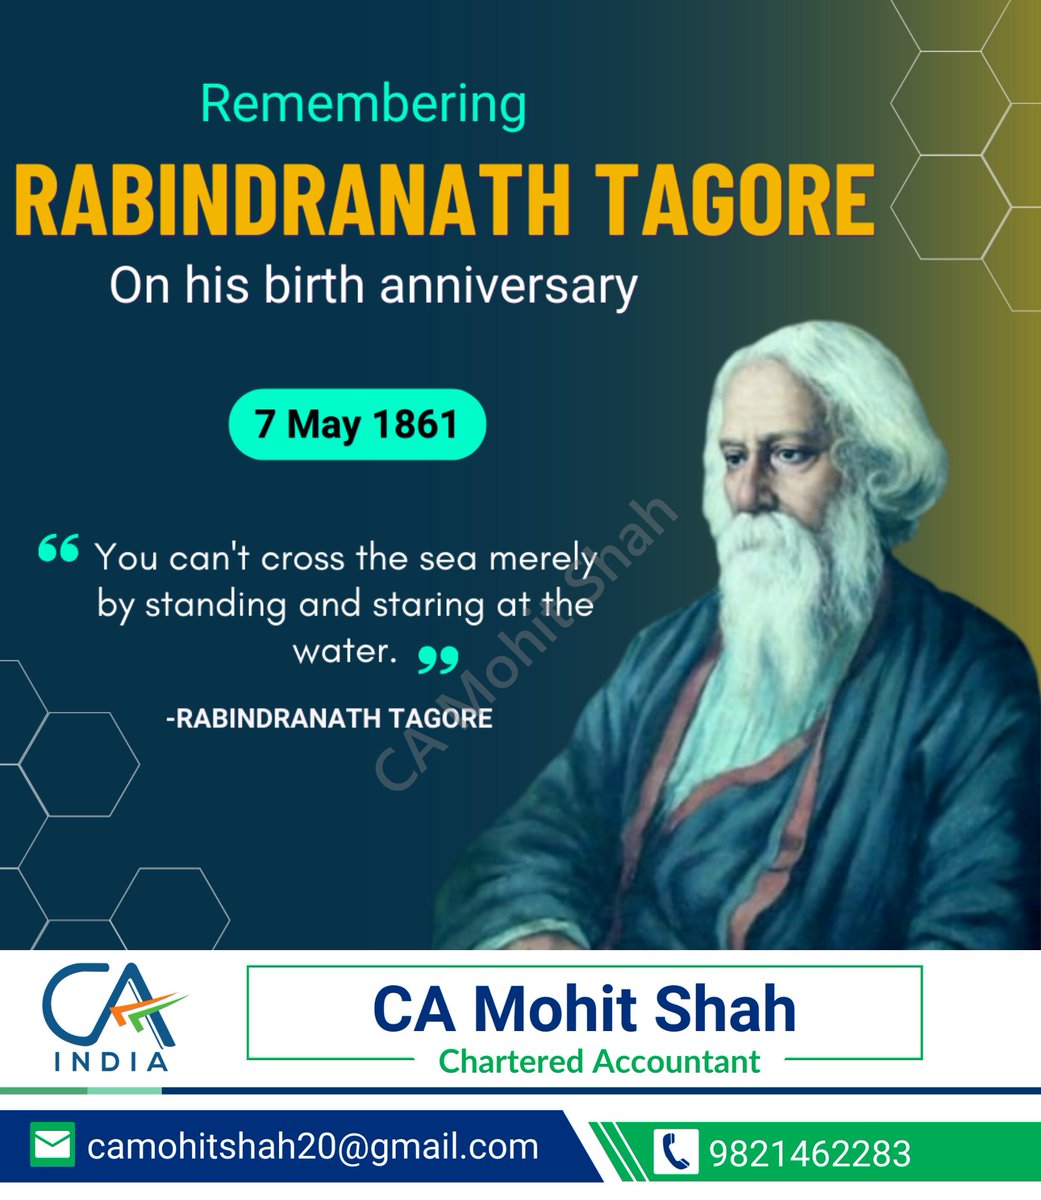 Remembering the legendary poet, Rabindranath Tagore, on his birth anniversary. His words continue to inspire us!

#TagoreJayanti #RabindraJayanti #PochisheBoishakh #Gurudev #BengaliCulture #IndianLiterature #NobelLaureate #TagorePoetry #Shantiniketan #RabindranathTagore